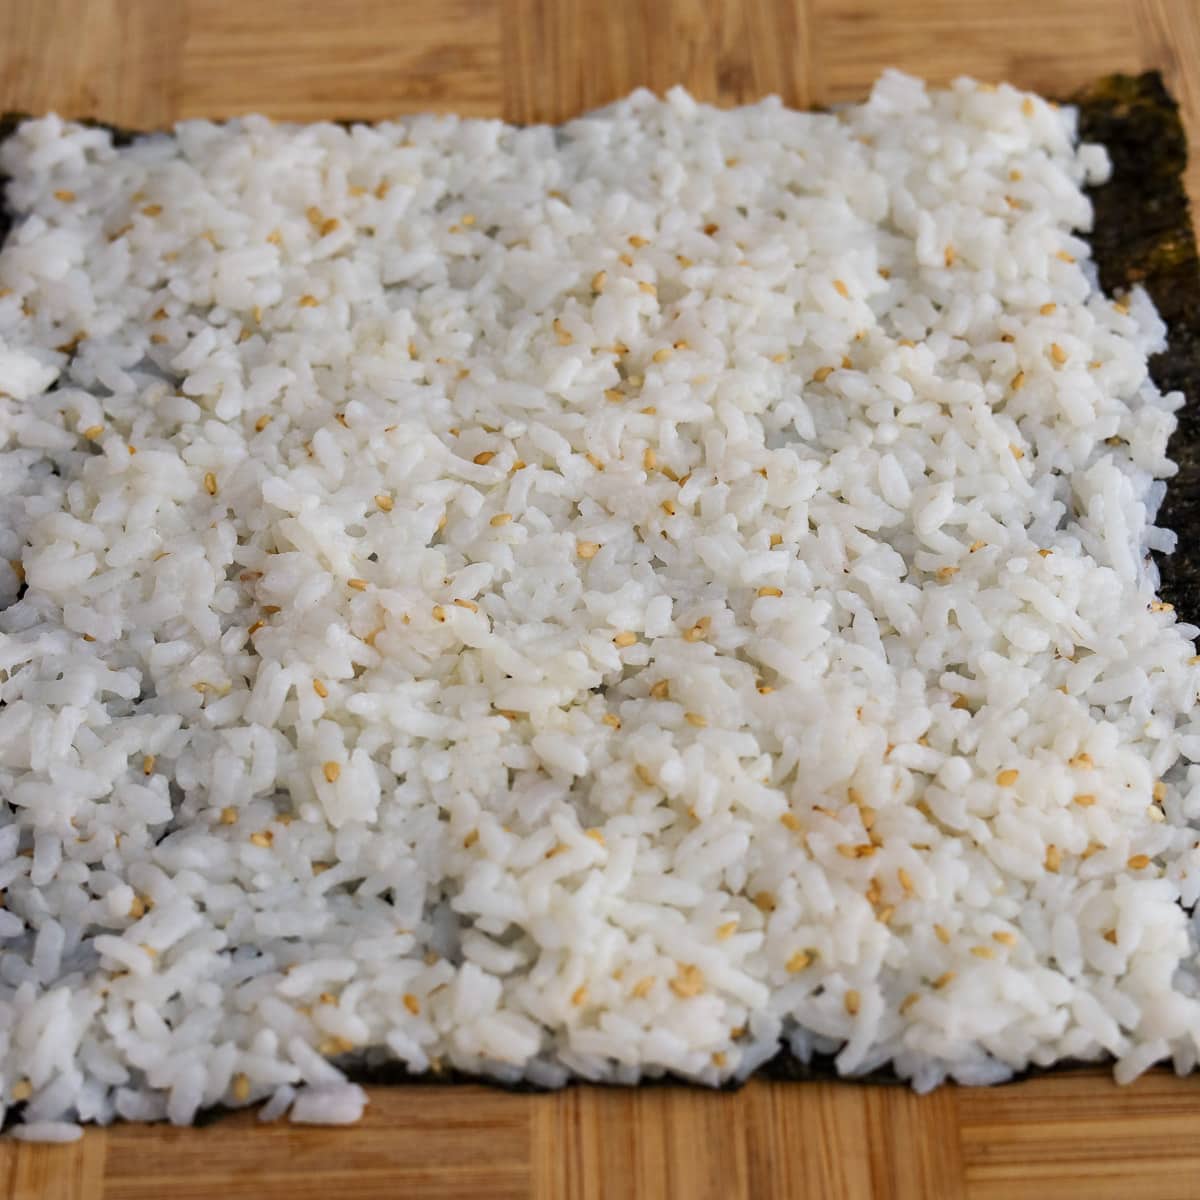 spread rice on nori